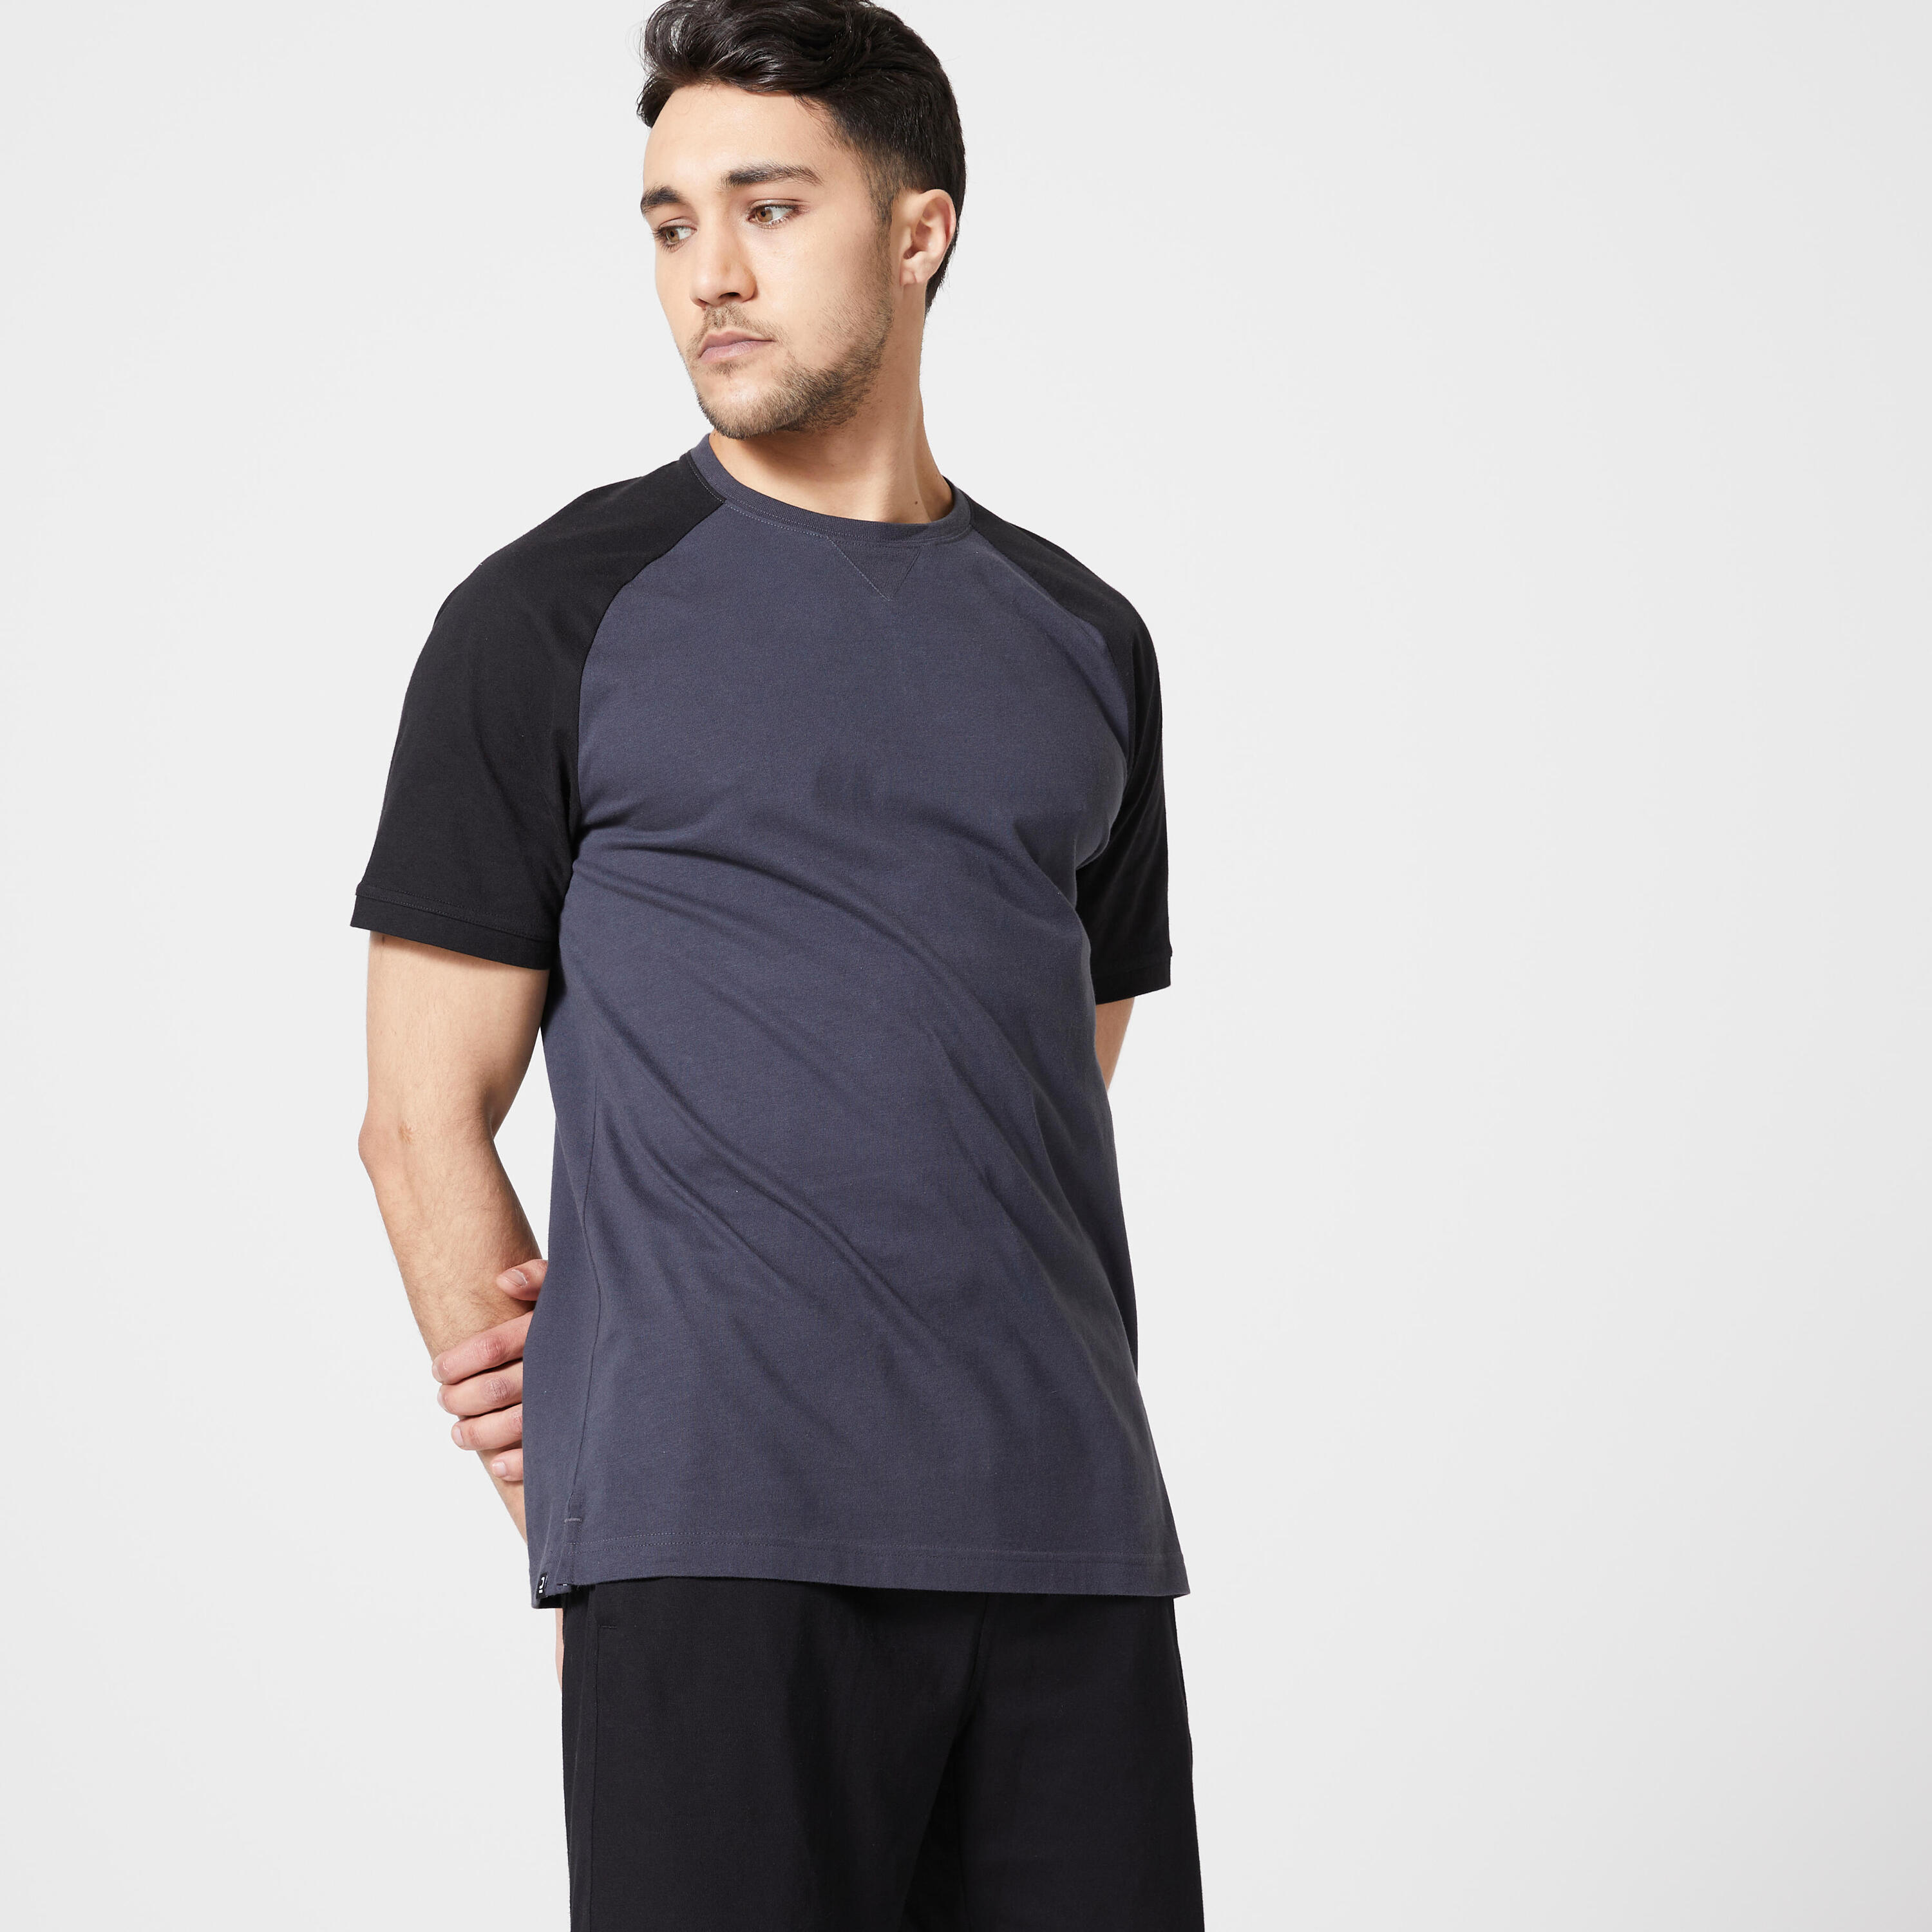 DOMYOS Men's Fitness T-Shirt 520 - Grey/Black